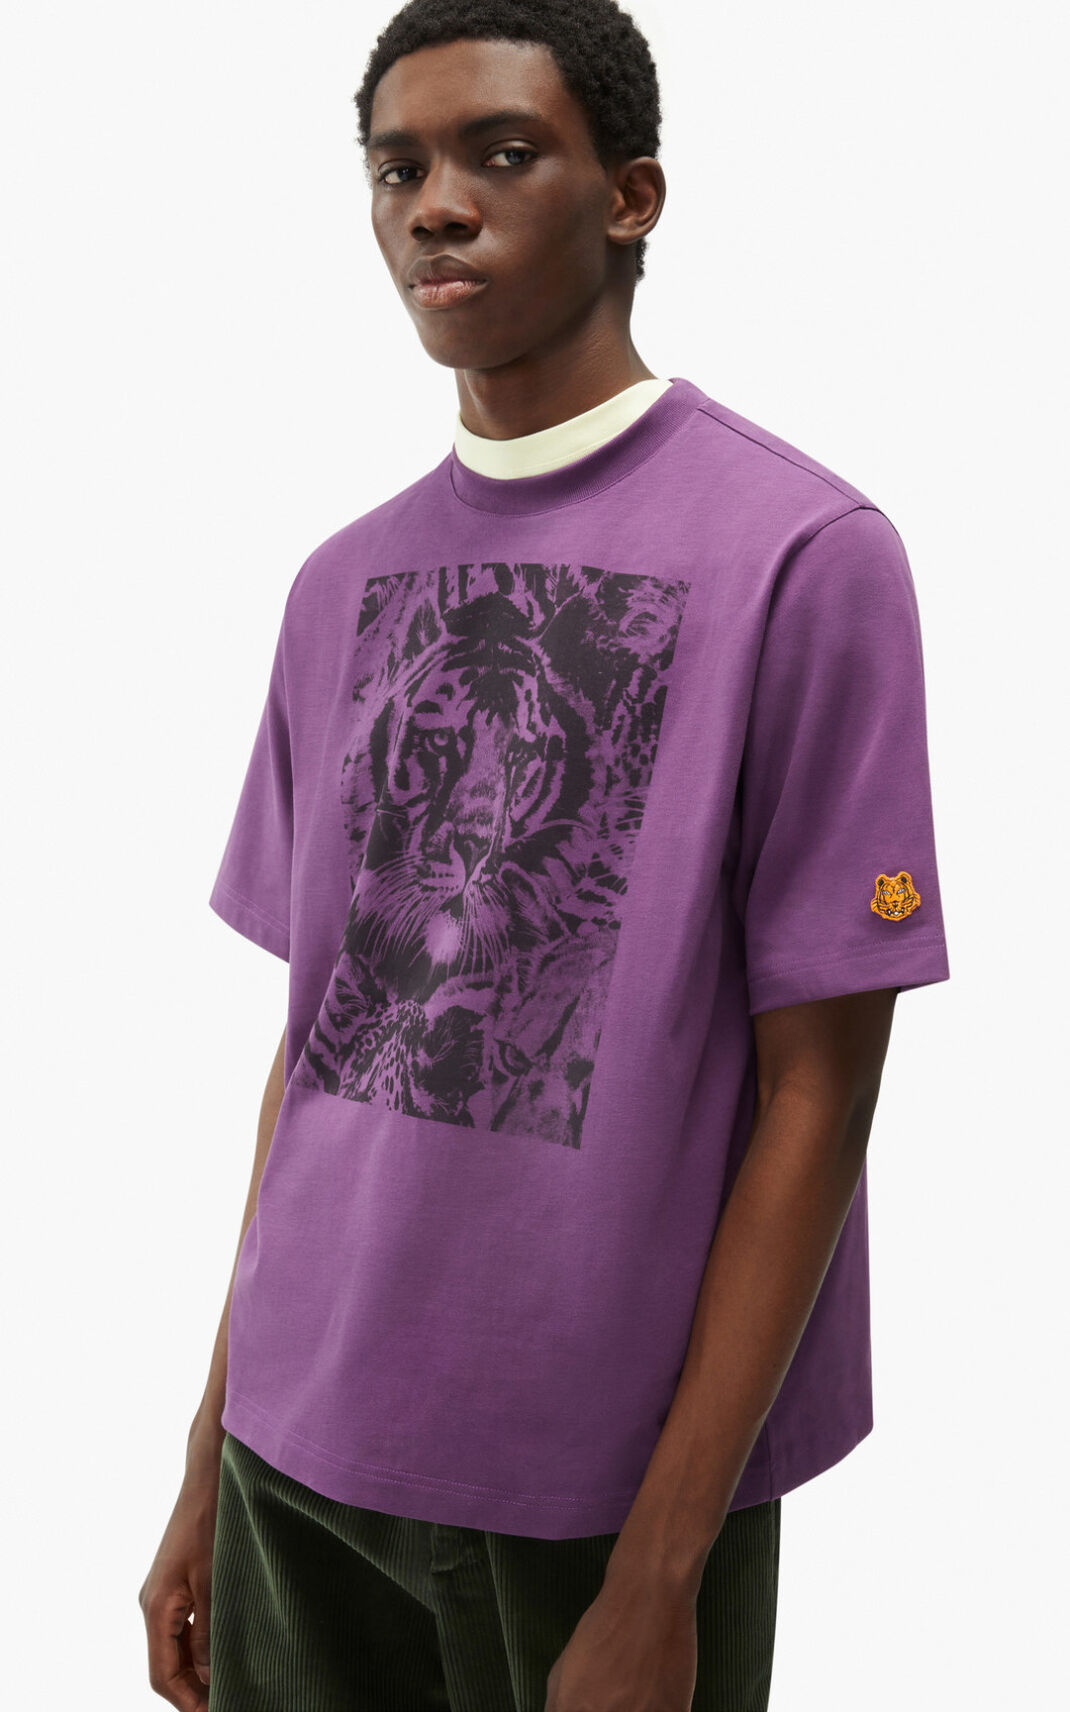 Kenzo Wild虎s Tシャツ メンズ 黒 - TUAIYS243